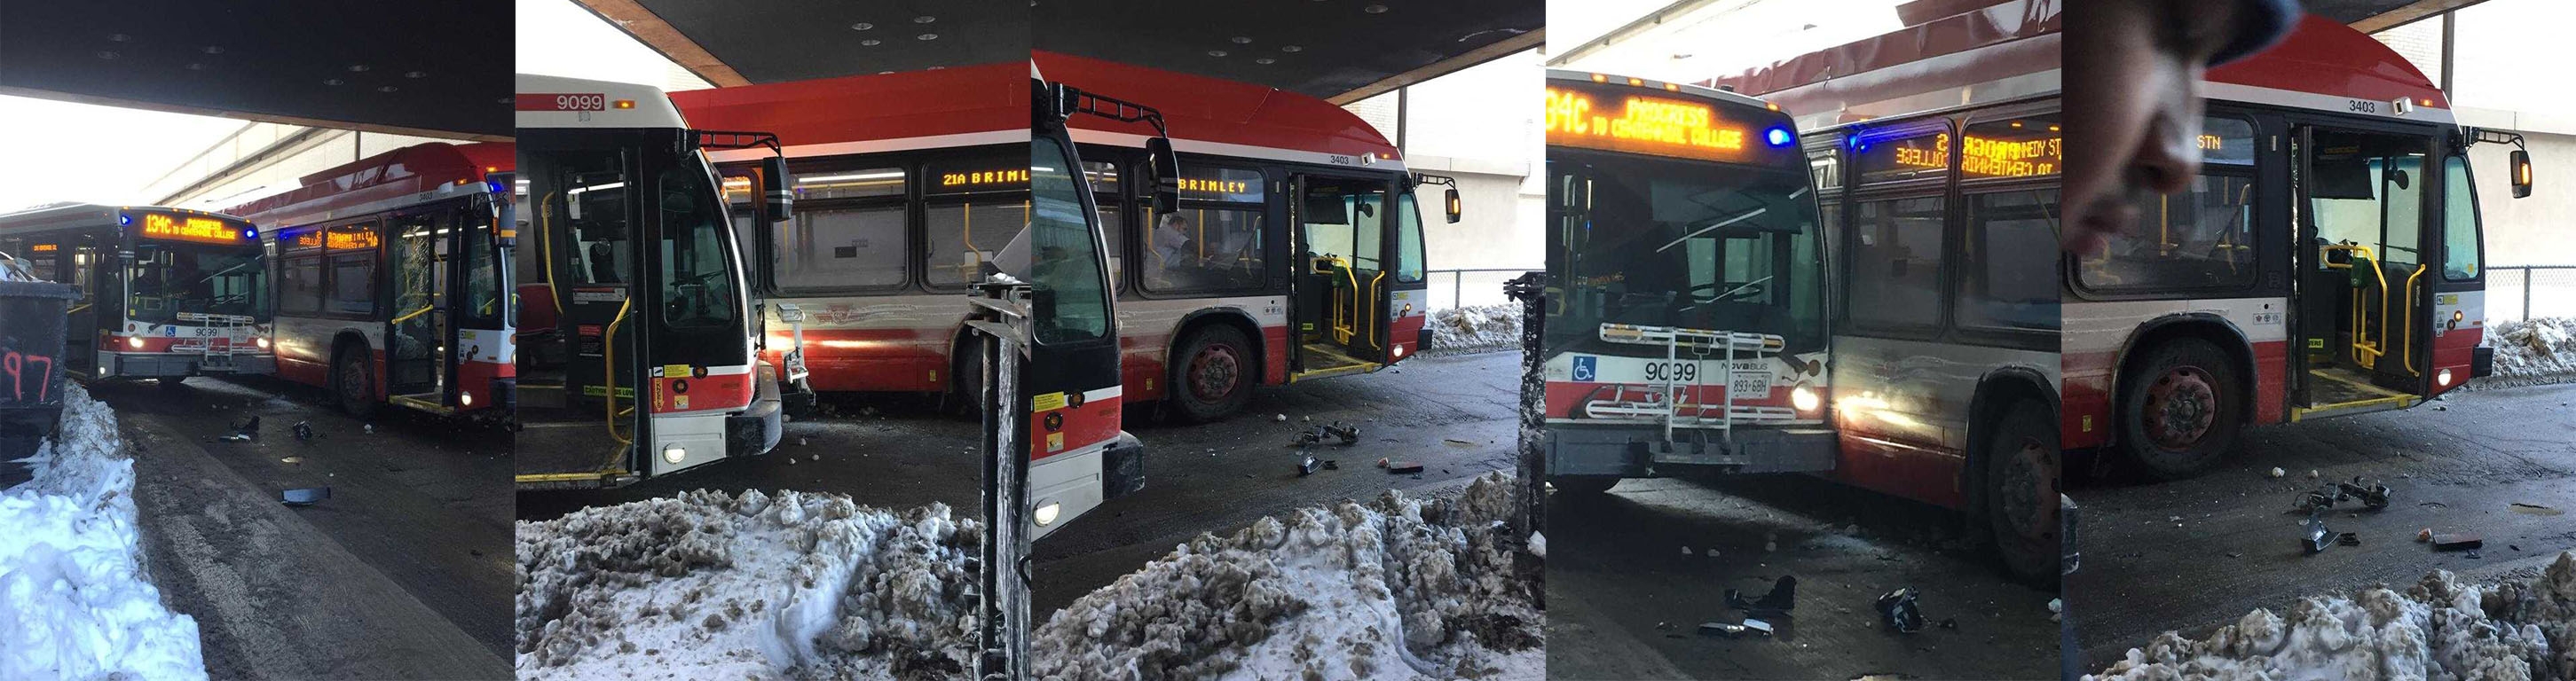 21 Brimley vs 134 Progress Bus crash